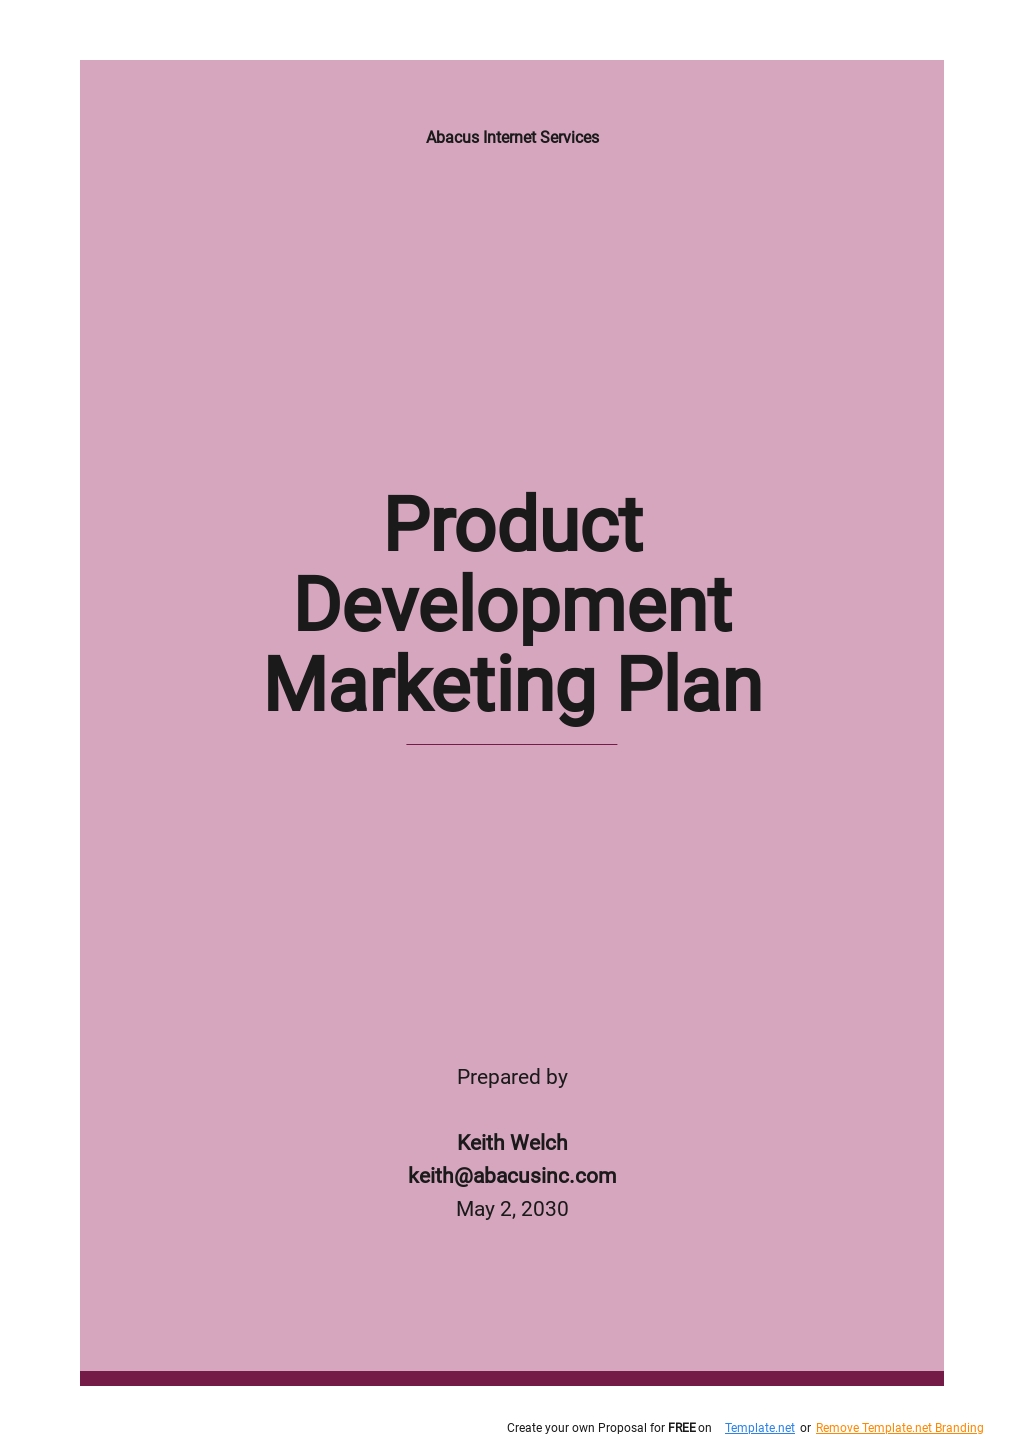 Product Development Marketing Plan Template